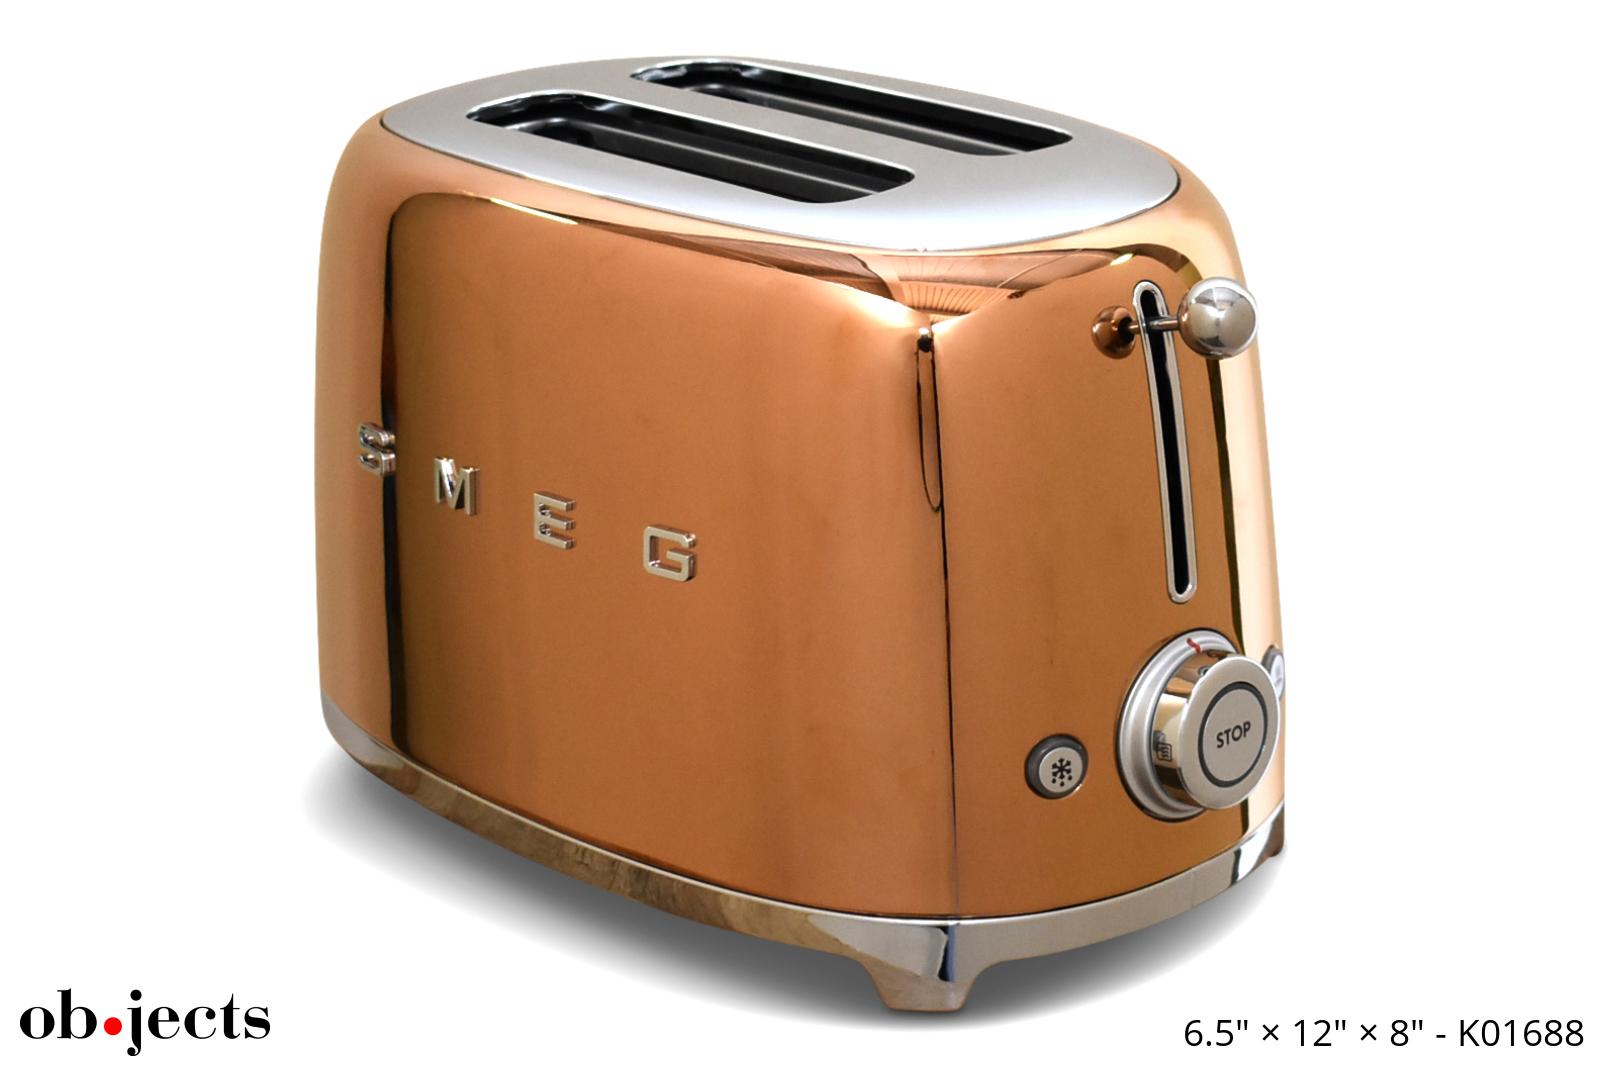 Toaster SMEG Polished Copper 2-Slice